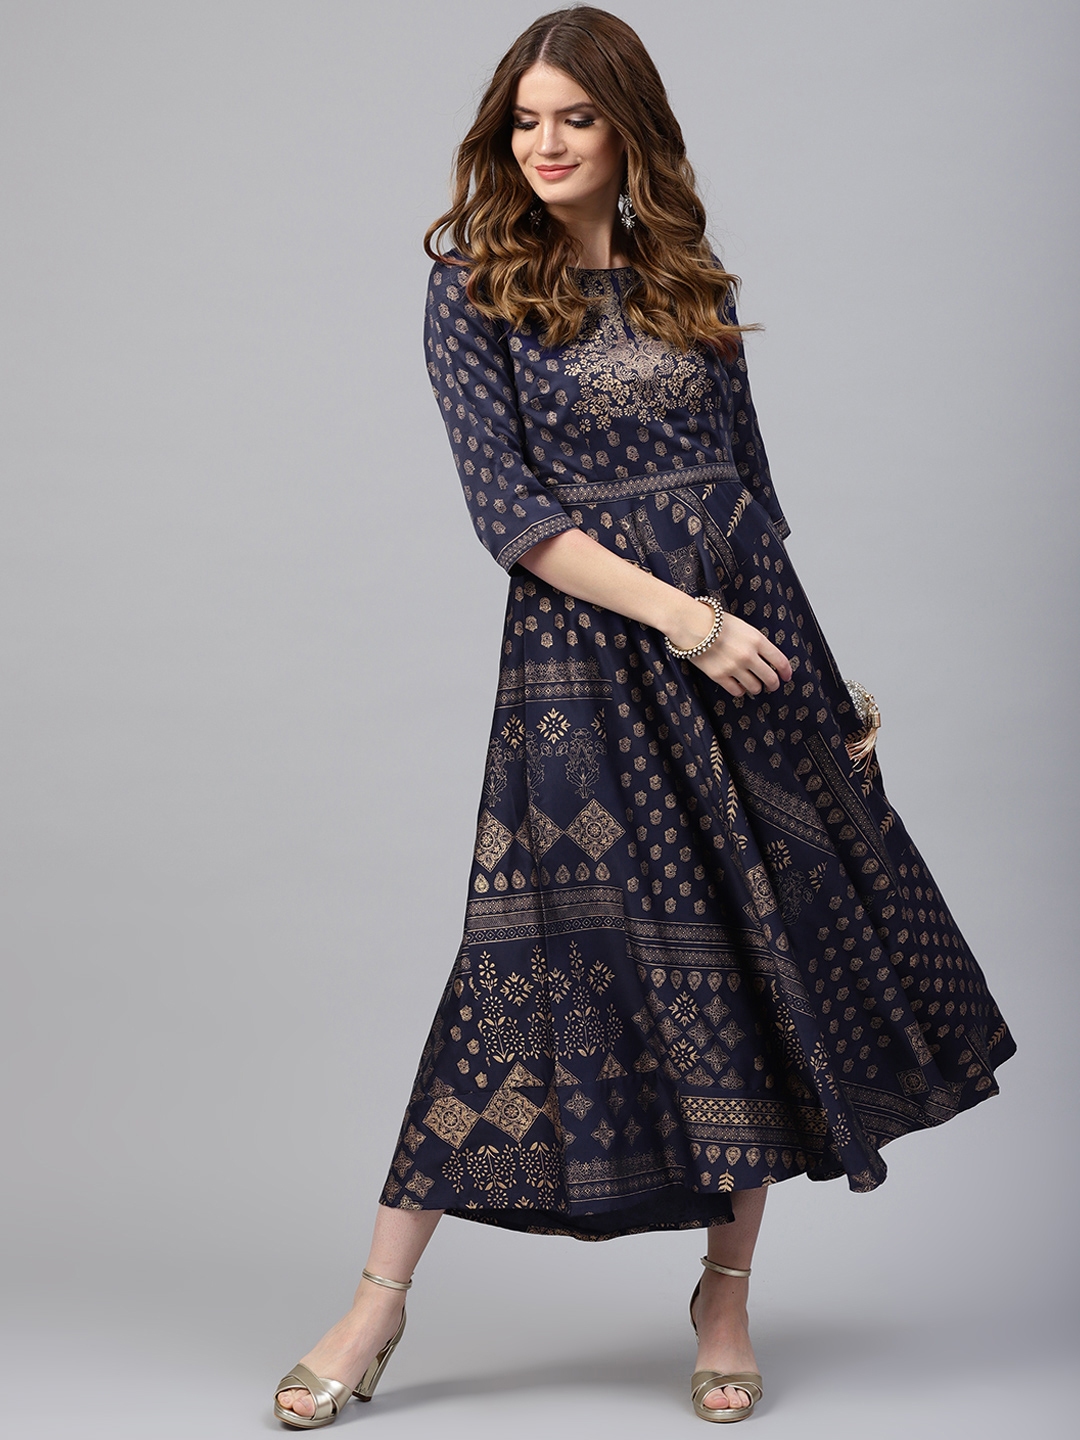 Buy Juniper Navy Blue & Golden Ethnic Motifs Ethnic Maxi Dress